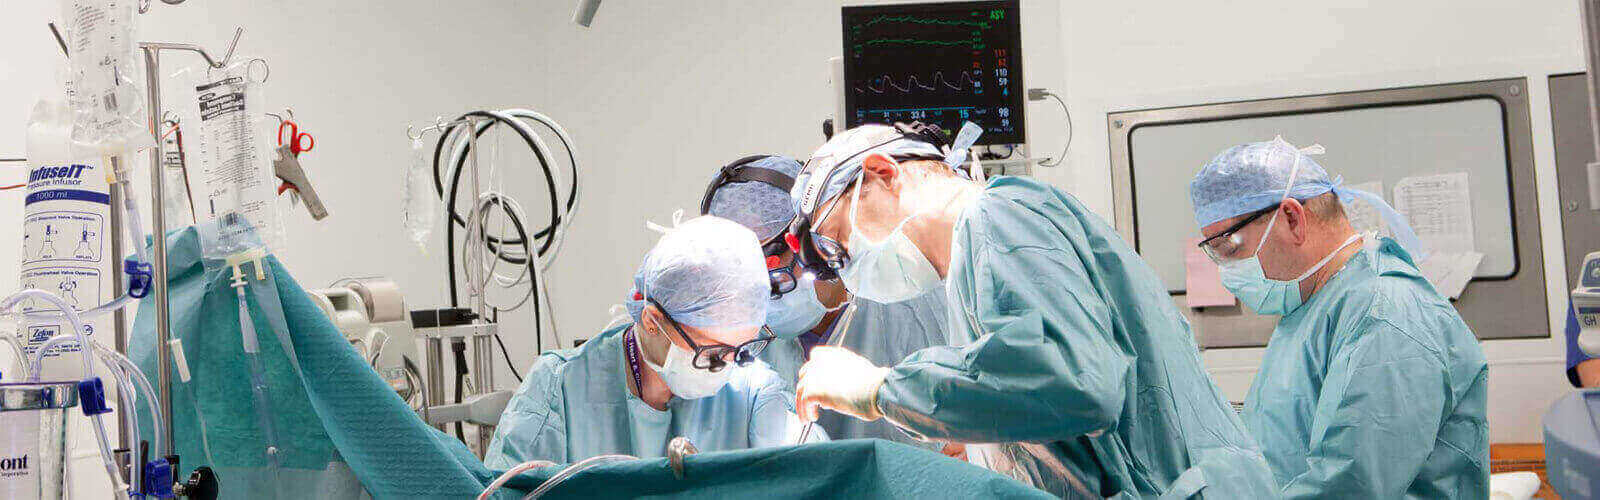 Heart Surgery Or Cardiac Surgery in Brazil